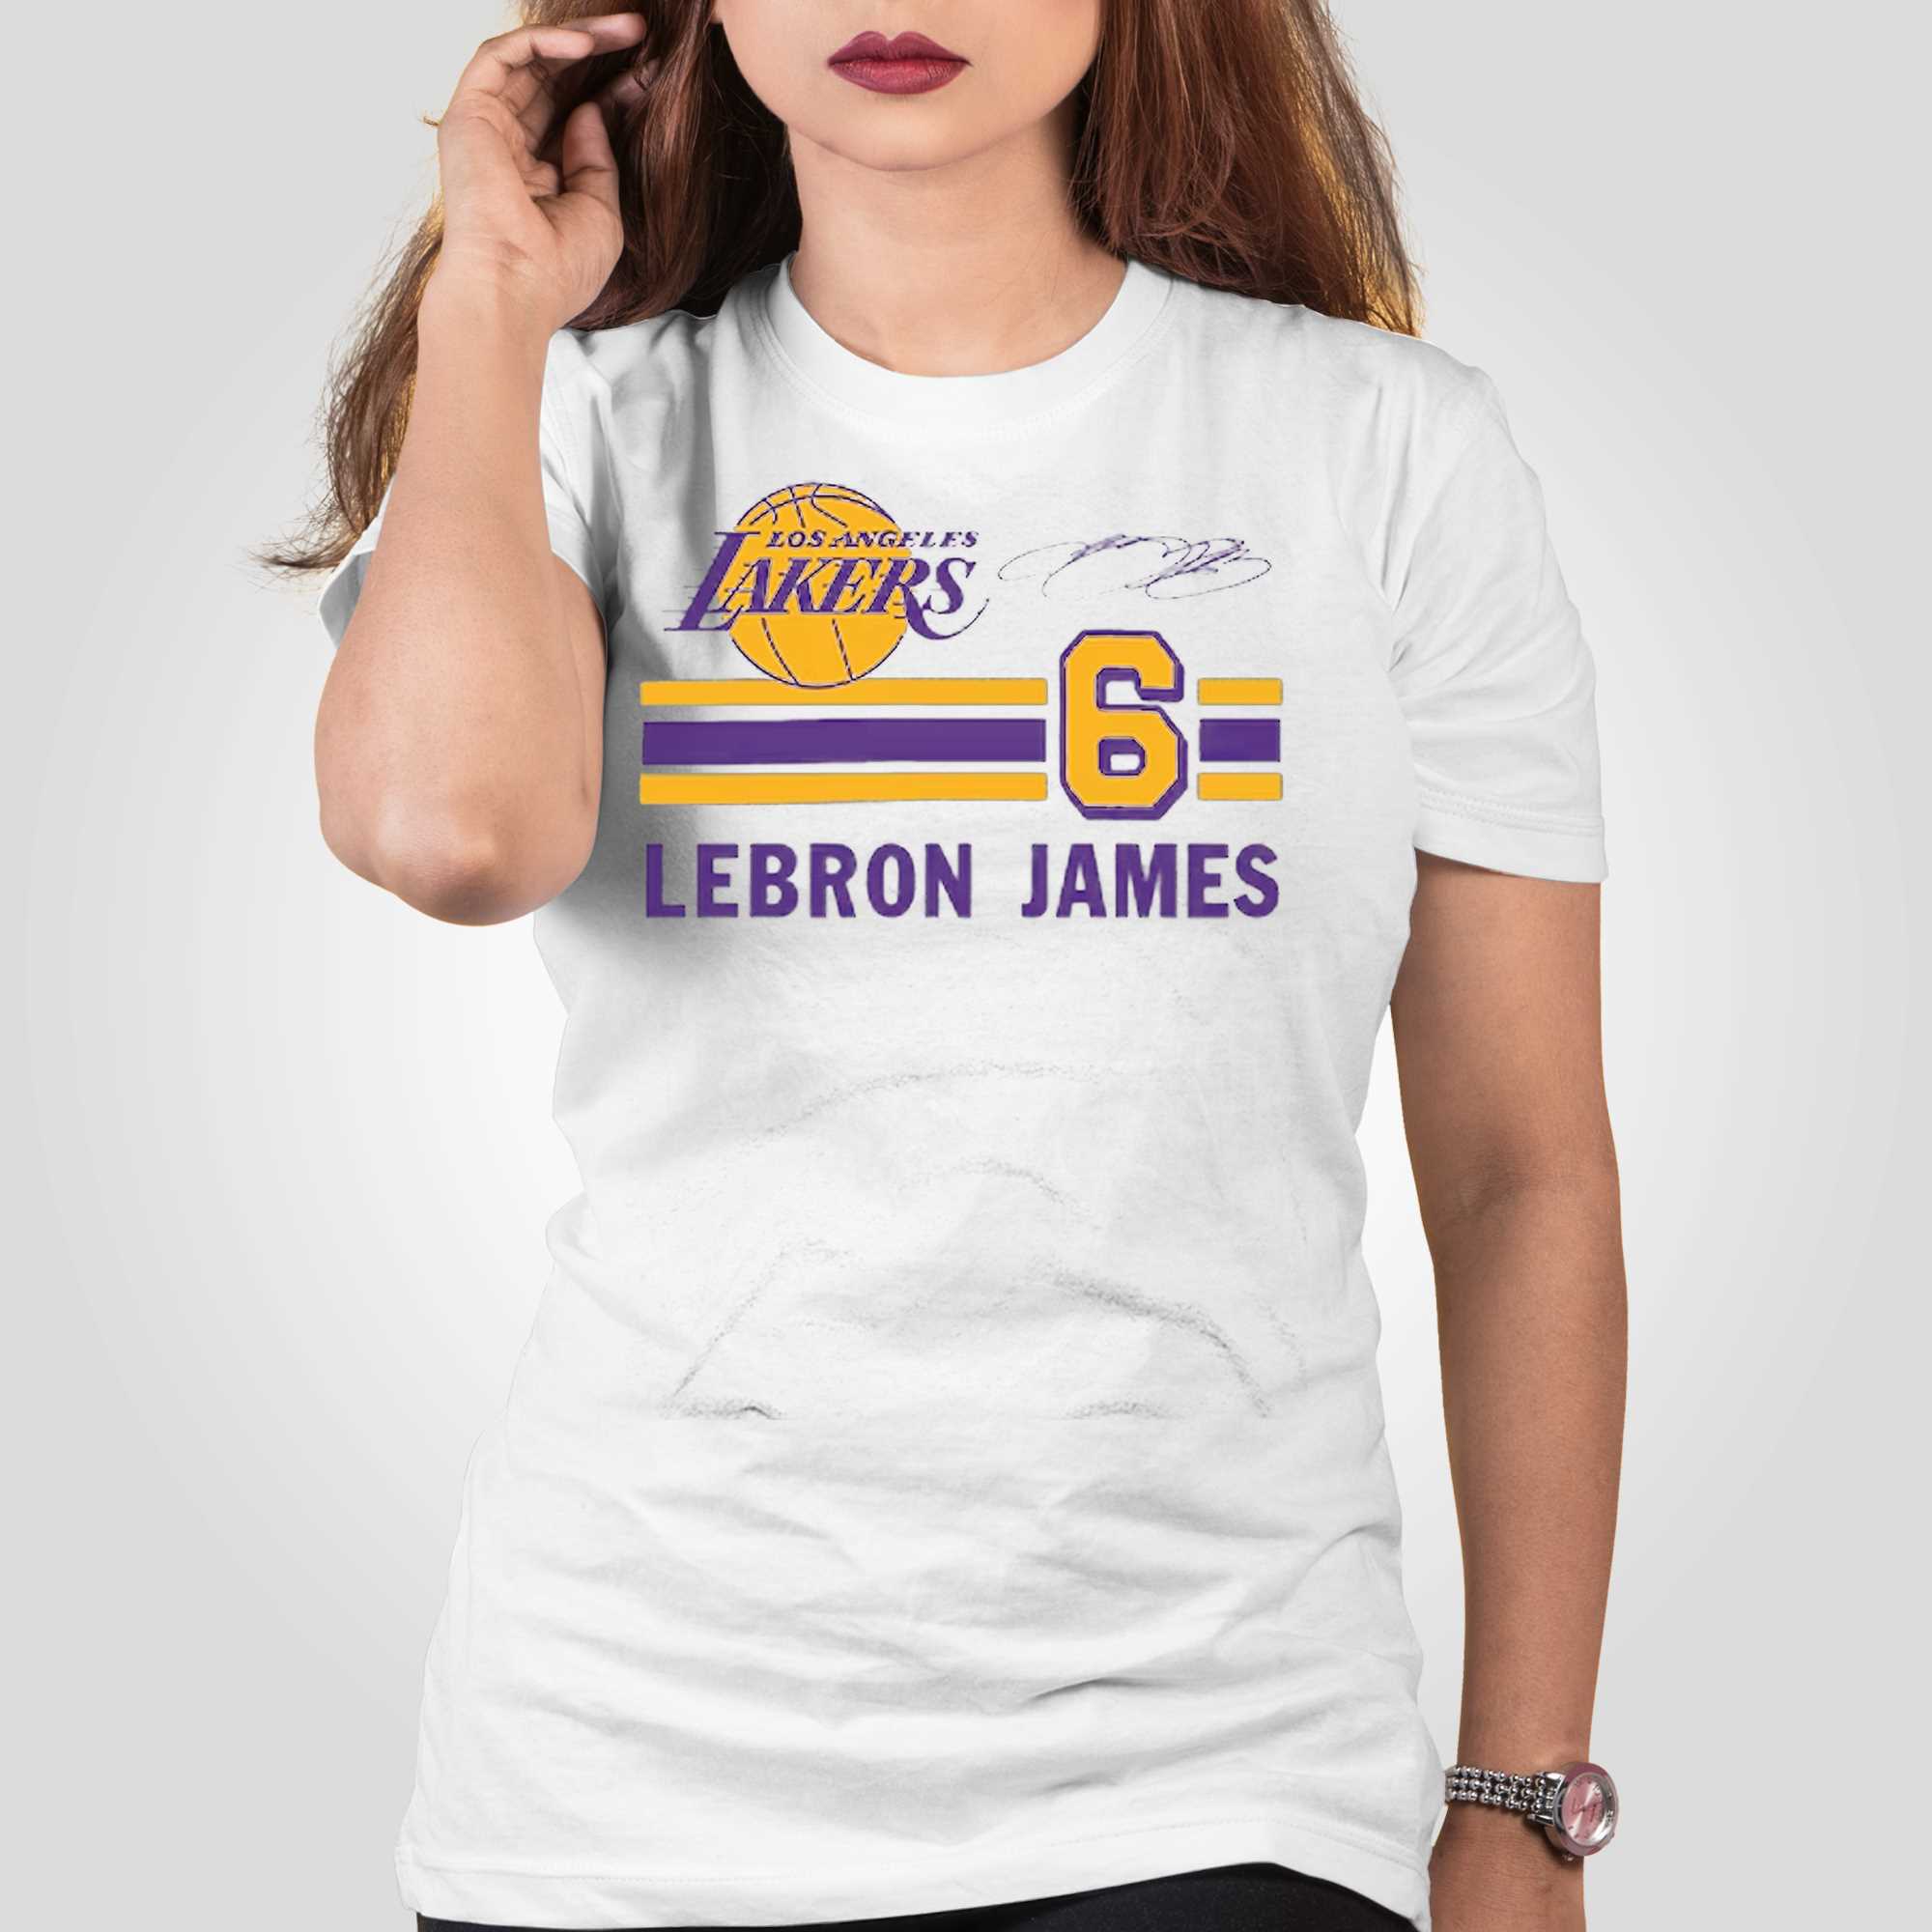 lebron james womens shirt